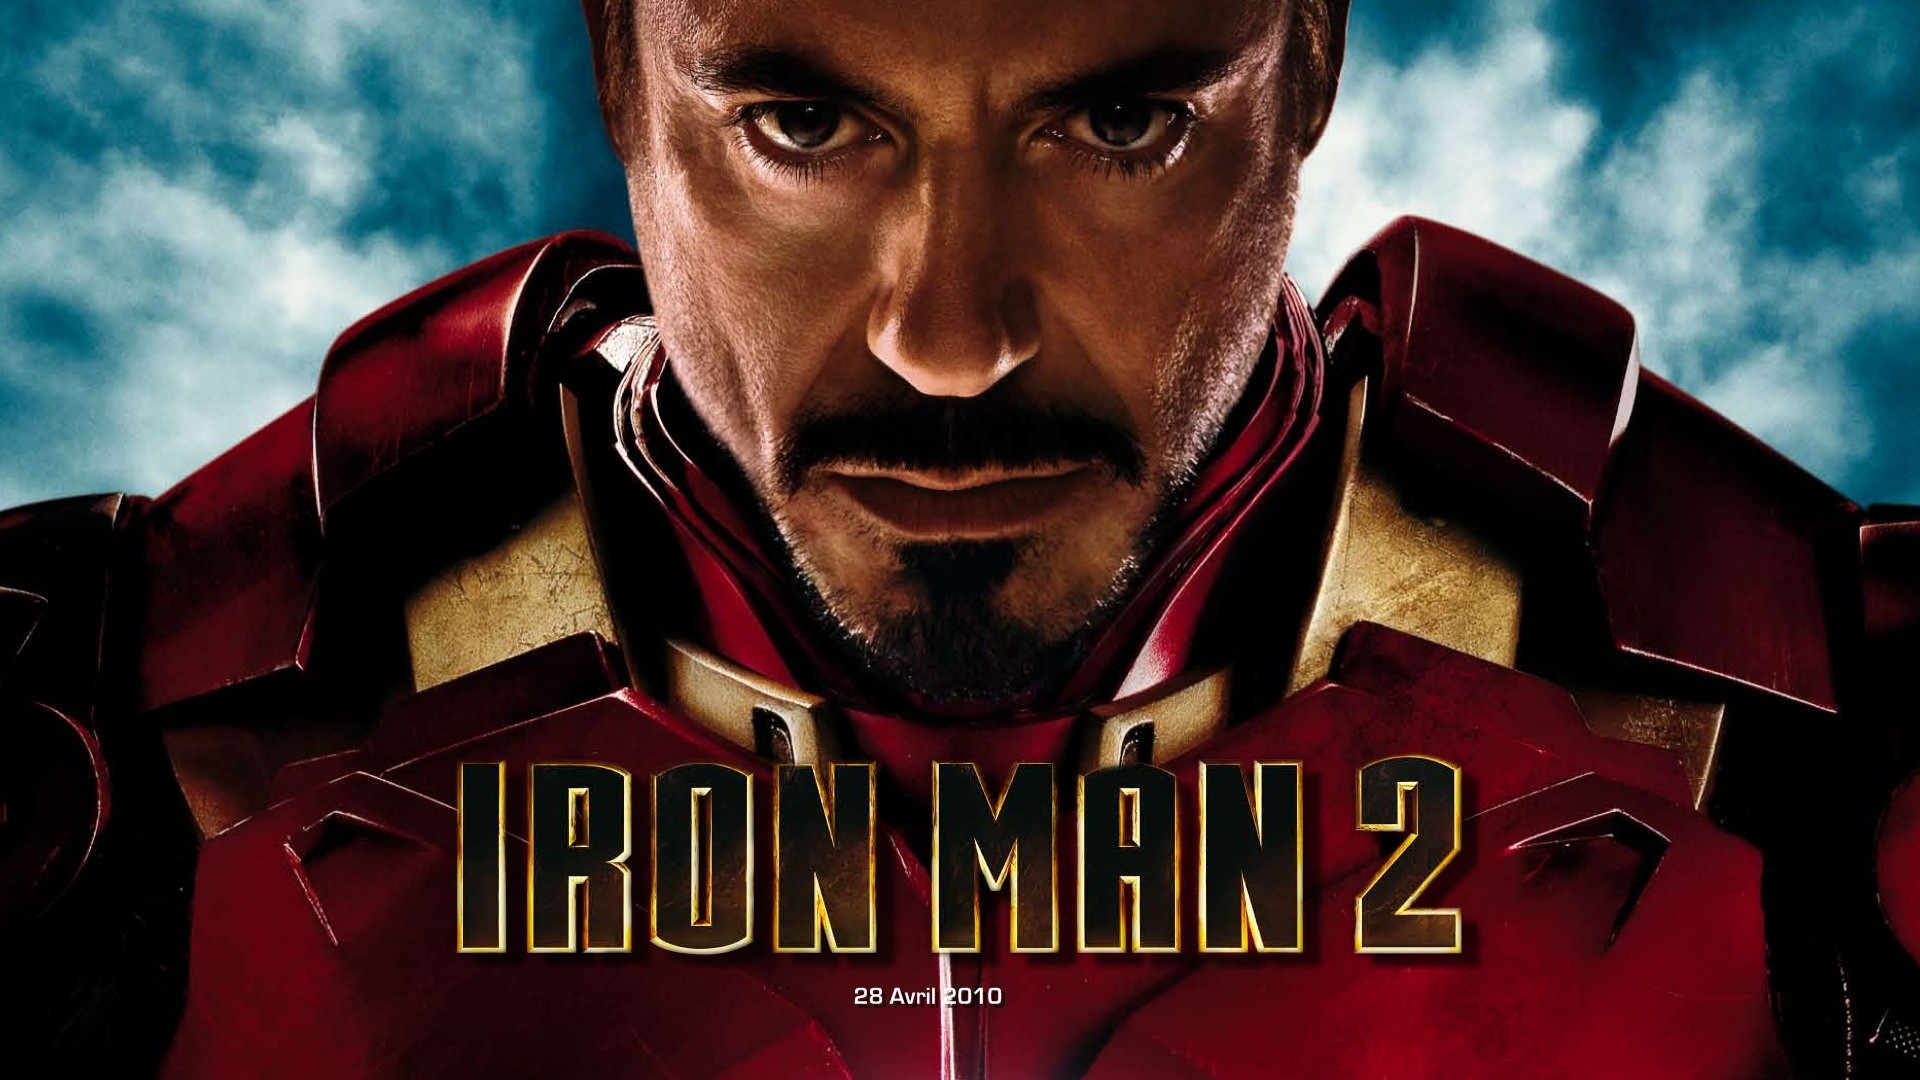 General 1920x1080 movies Iron Man 2 Iron Man Tony Stark Robert Downey Jr. Marvel Cinematic Universe movie poster 2010 (Year) actor superhero Marvel Comics